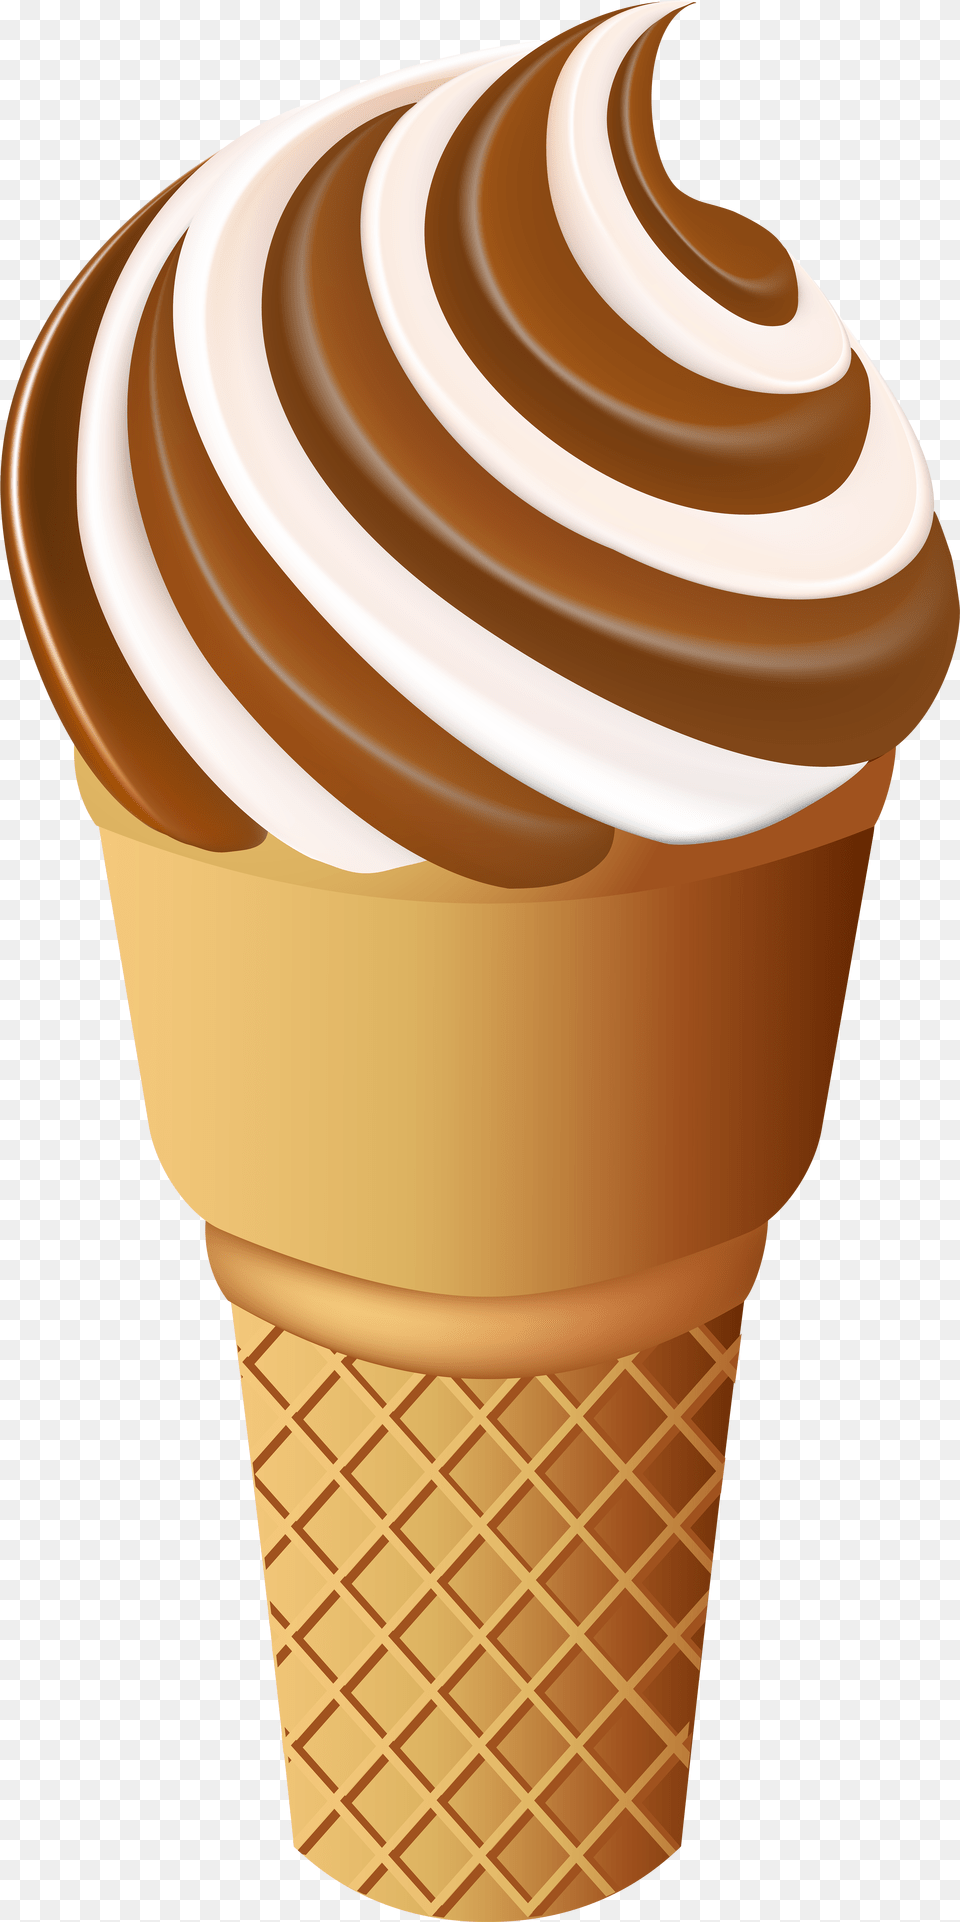 Download Ice Cream Image For Ice Cream Clipart, Dessert, Food, Ice Cream, Soft Serve Ice Cream Png